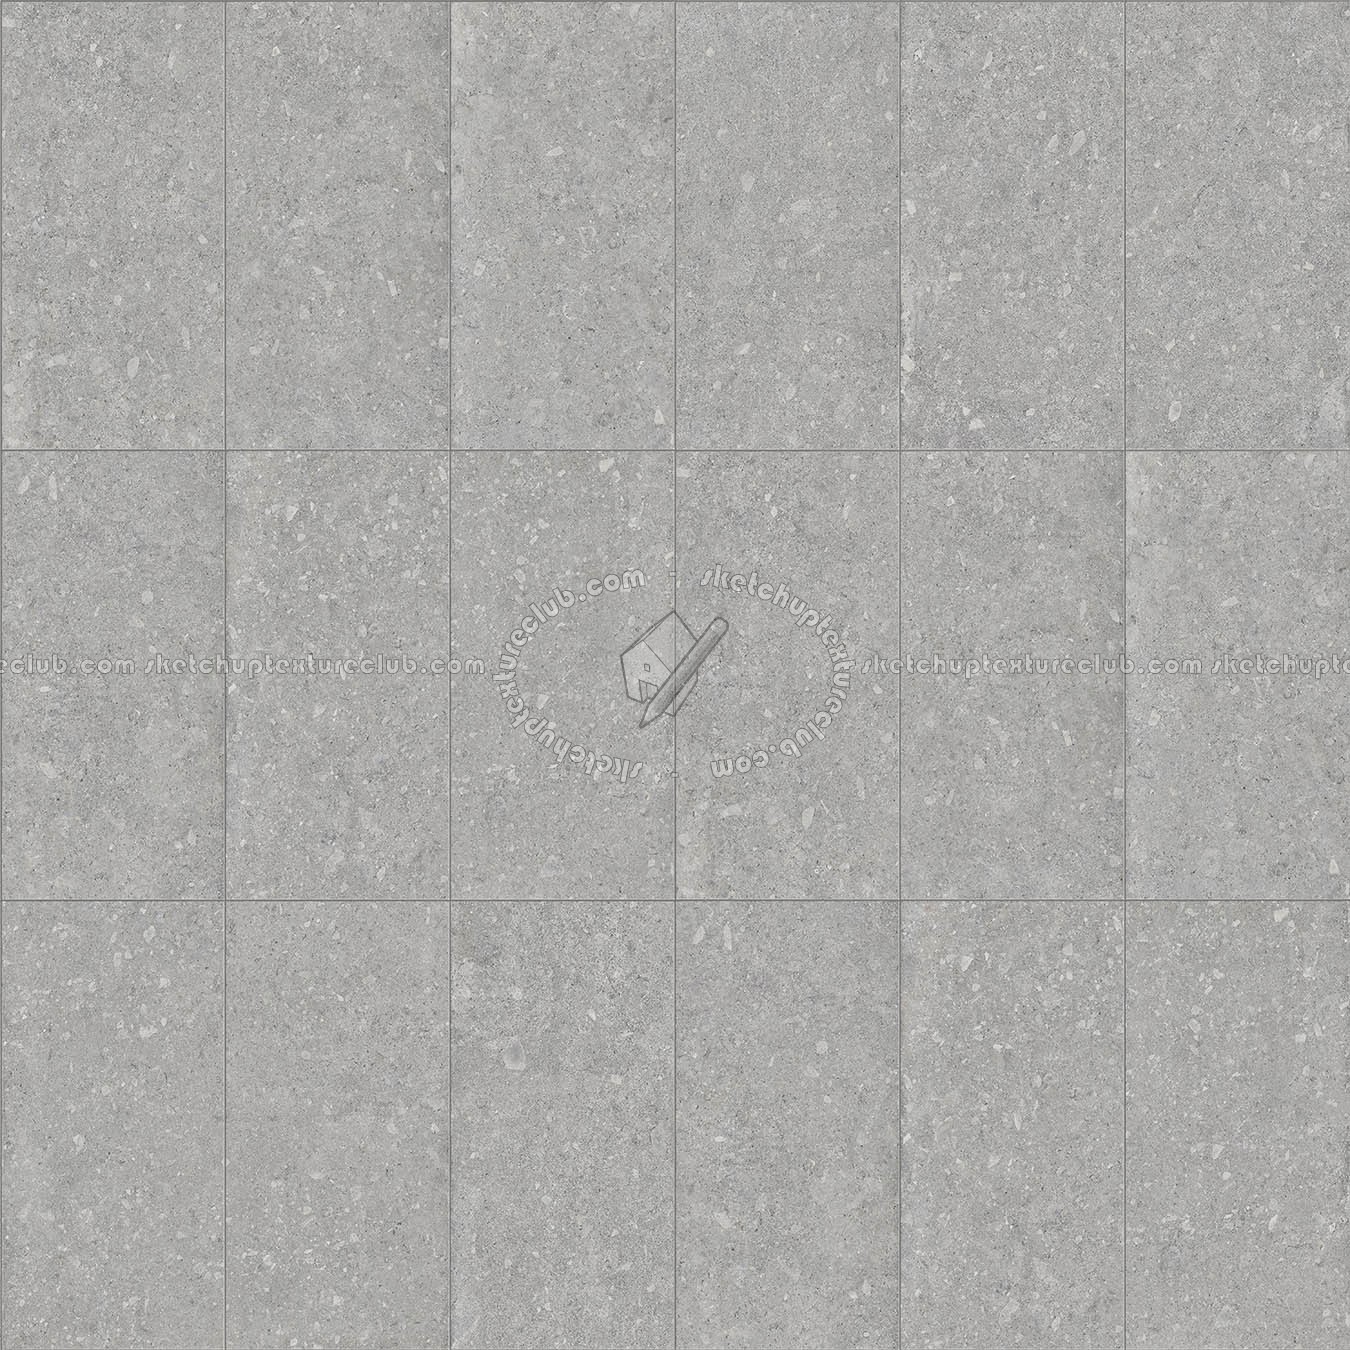 Vicentina stone floor 60X120 pbr seamless texture 22298